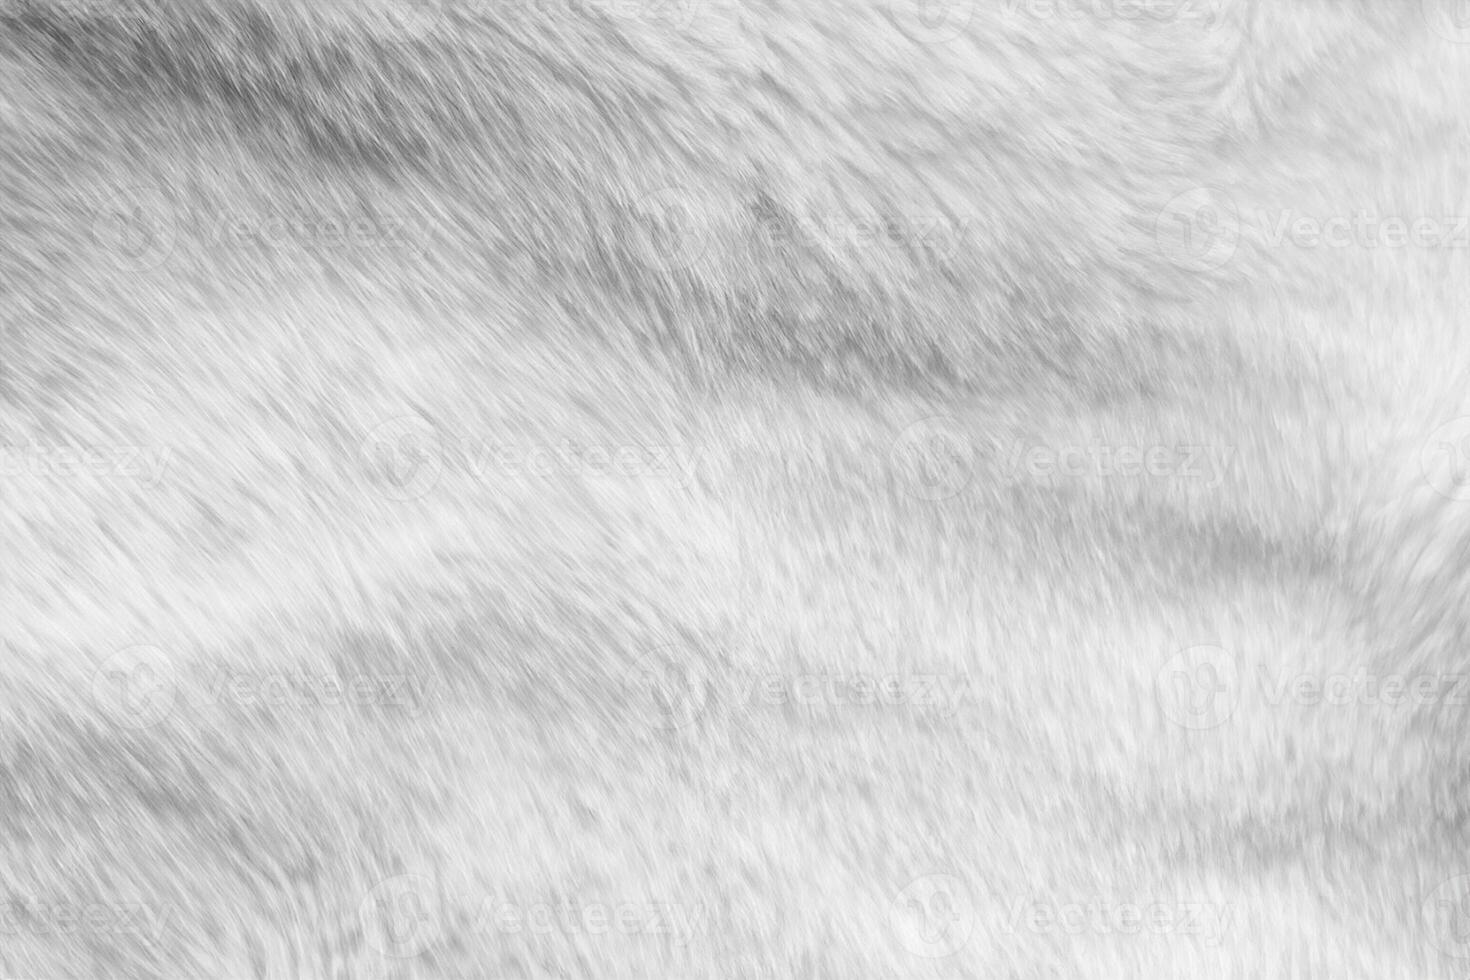 bianca pelliccia tessuto struttura sfondo foto